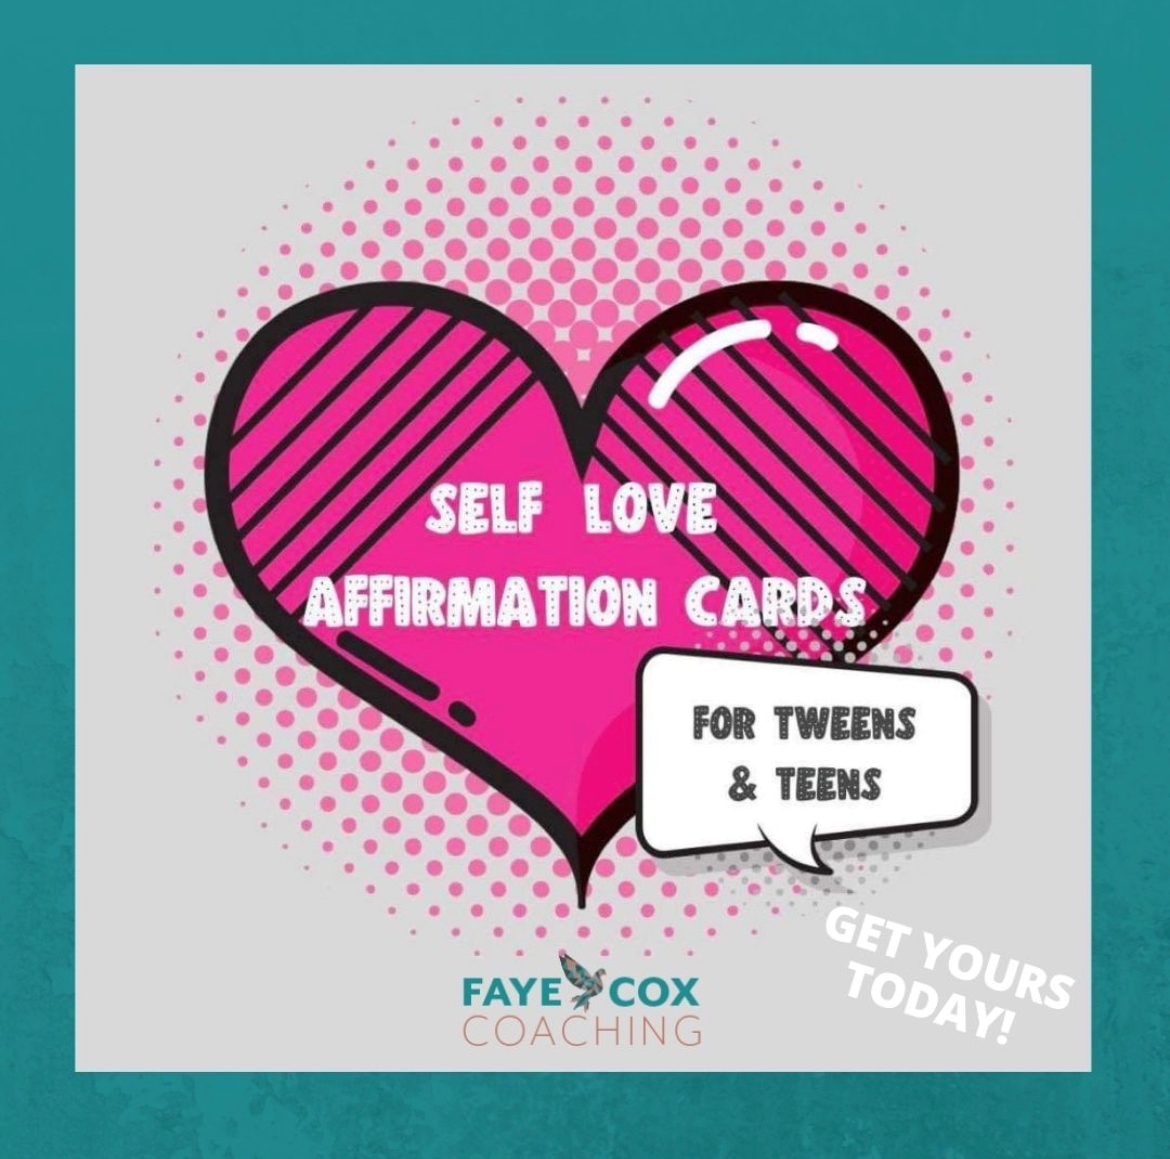 Self-love Affirmation Cards